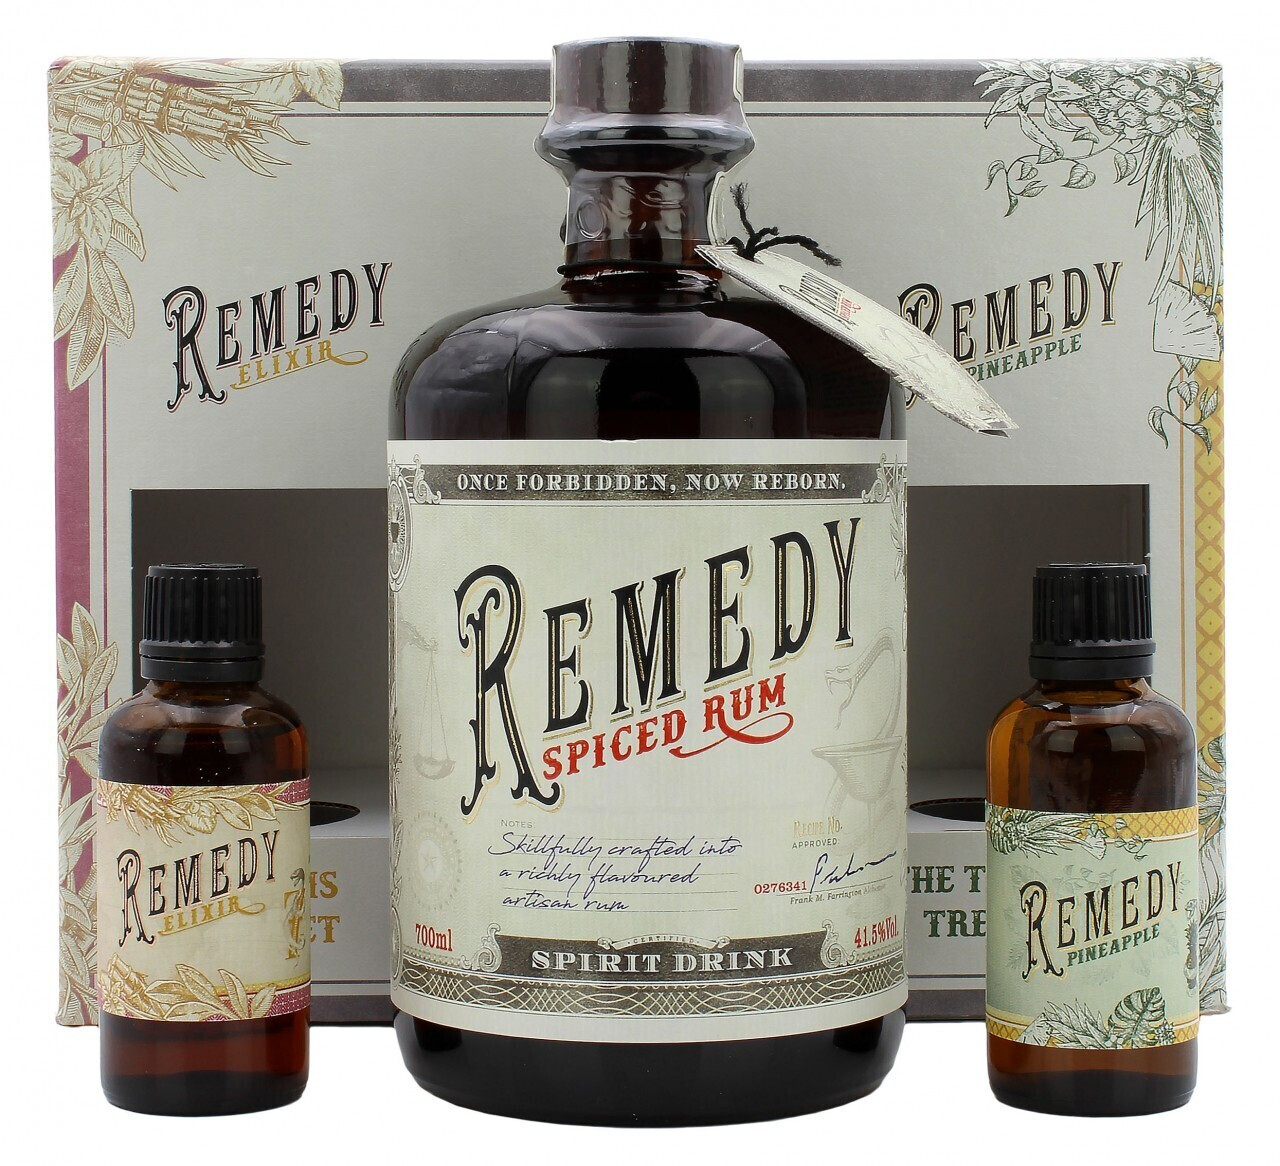 Sierra Madre Remedy Spiced Rum 21,60 | + Pineapple 41,5% 0,1l € ab 0,7l Minis bei Preisvergleich